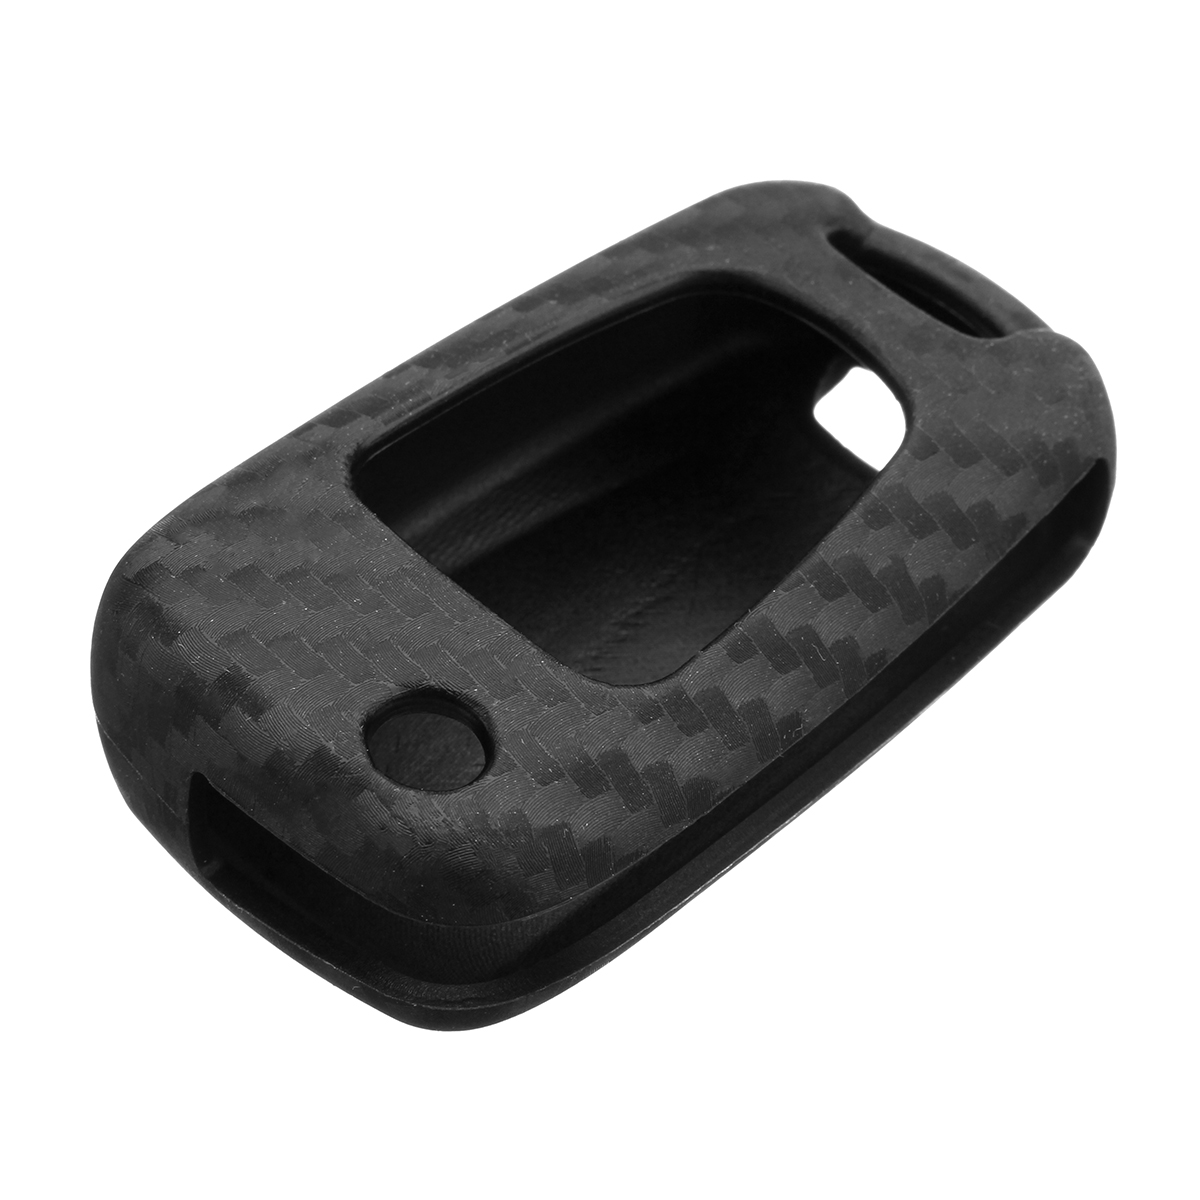 3 Button Carbon Fiber Style Silicone Remote Key Case For Hyundai I20 I30 IX35